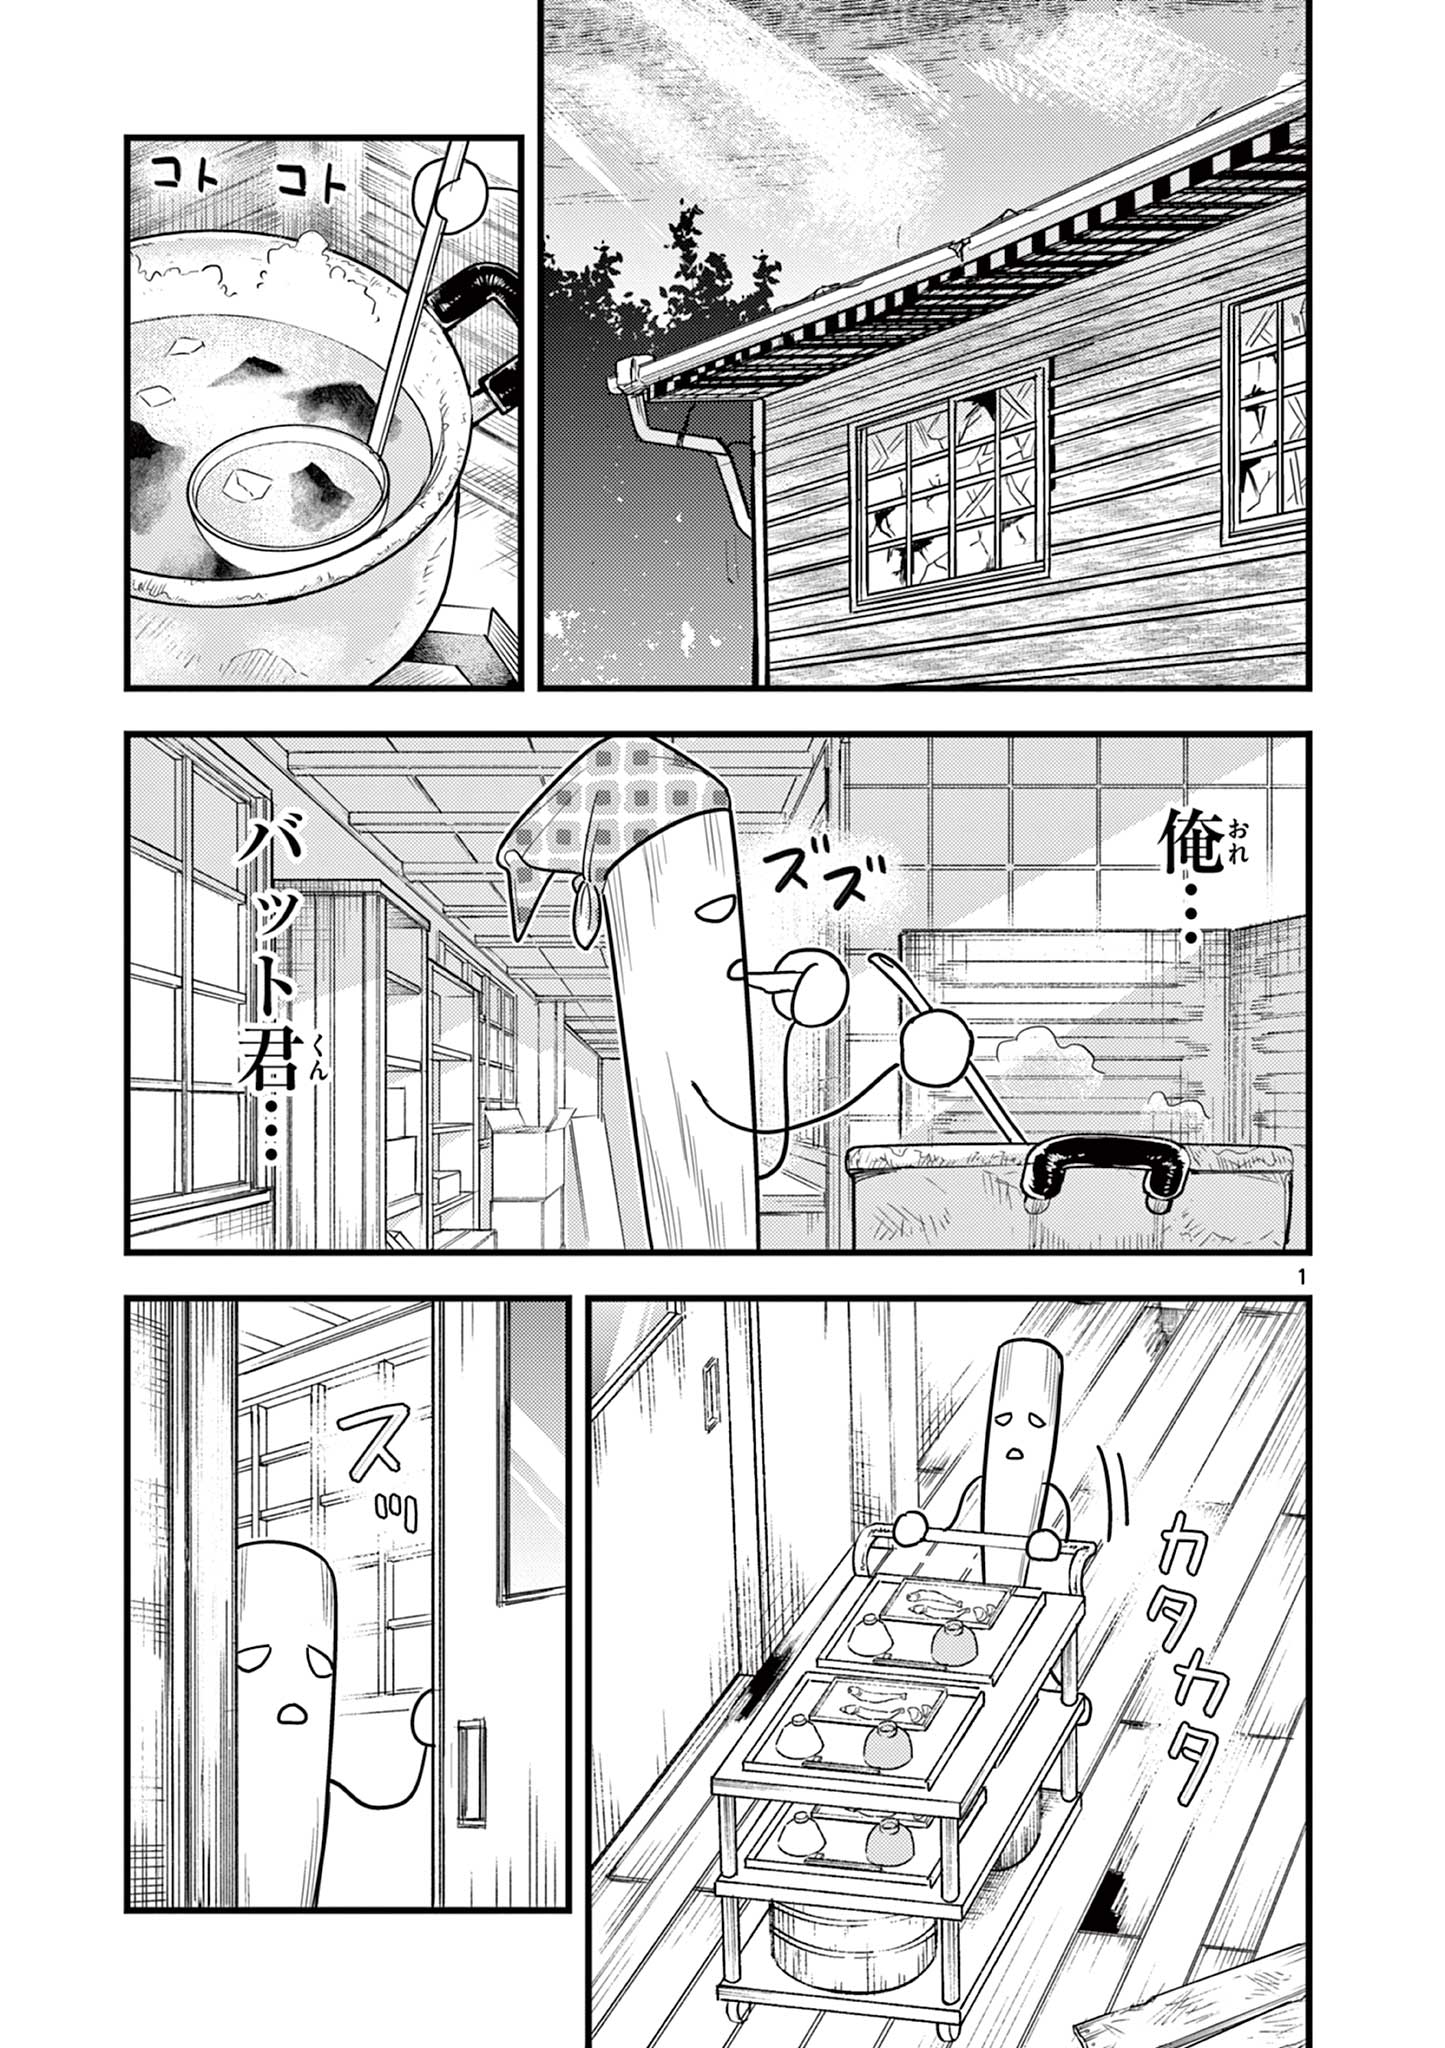 Kuro Mahou Ryou no Sanakunin - Chapter 12 - Page 1